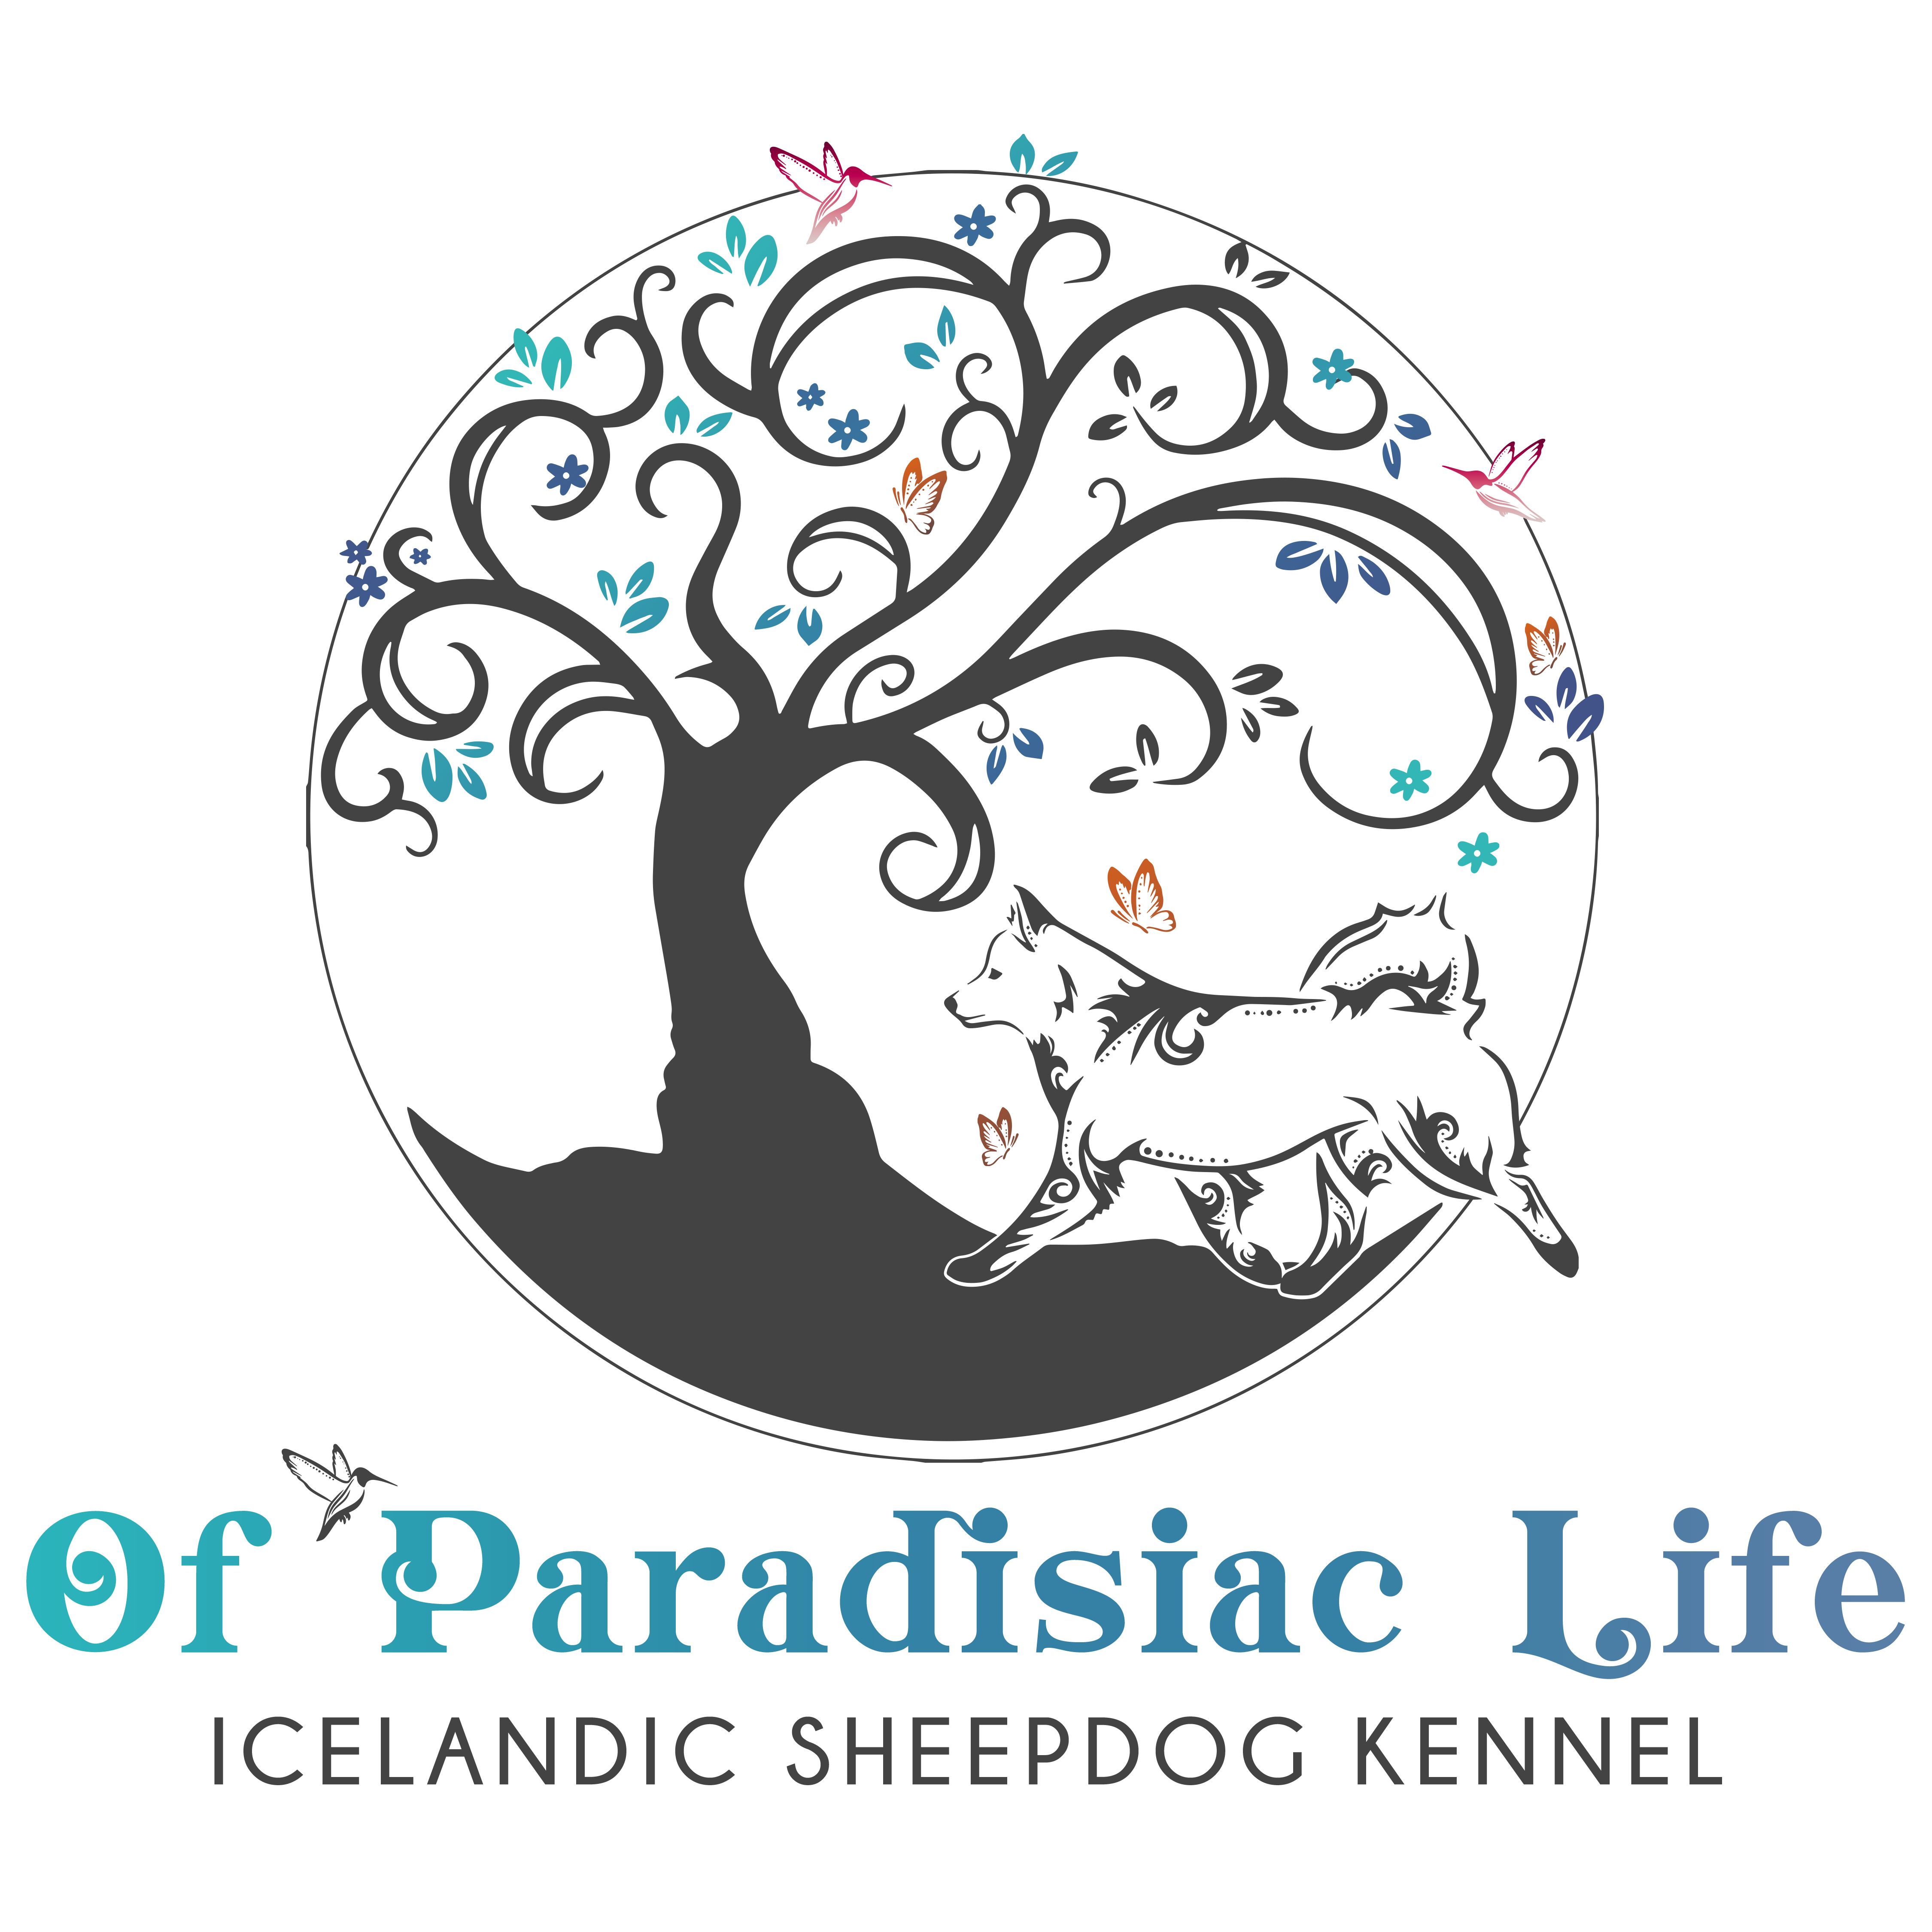 Of Paradisiac Life